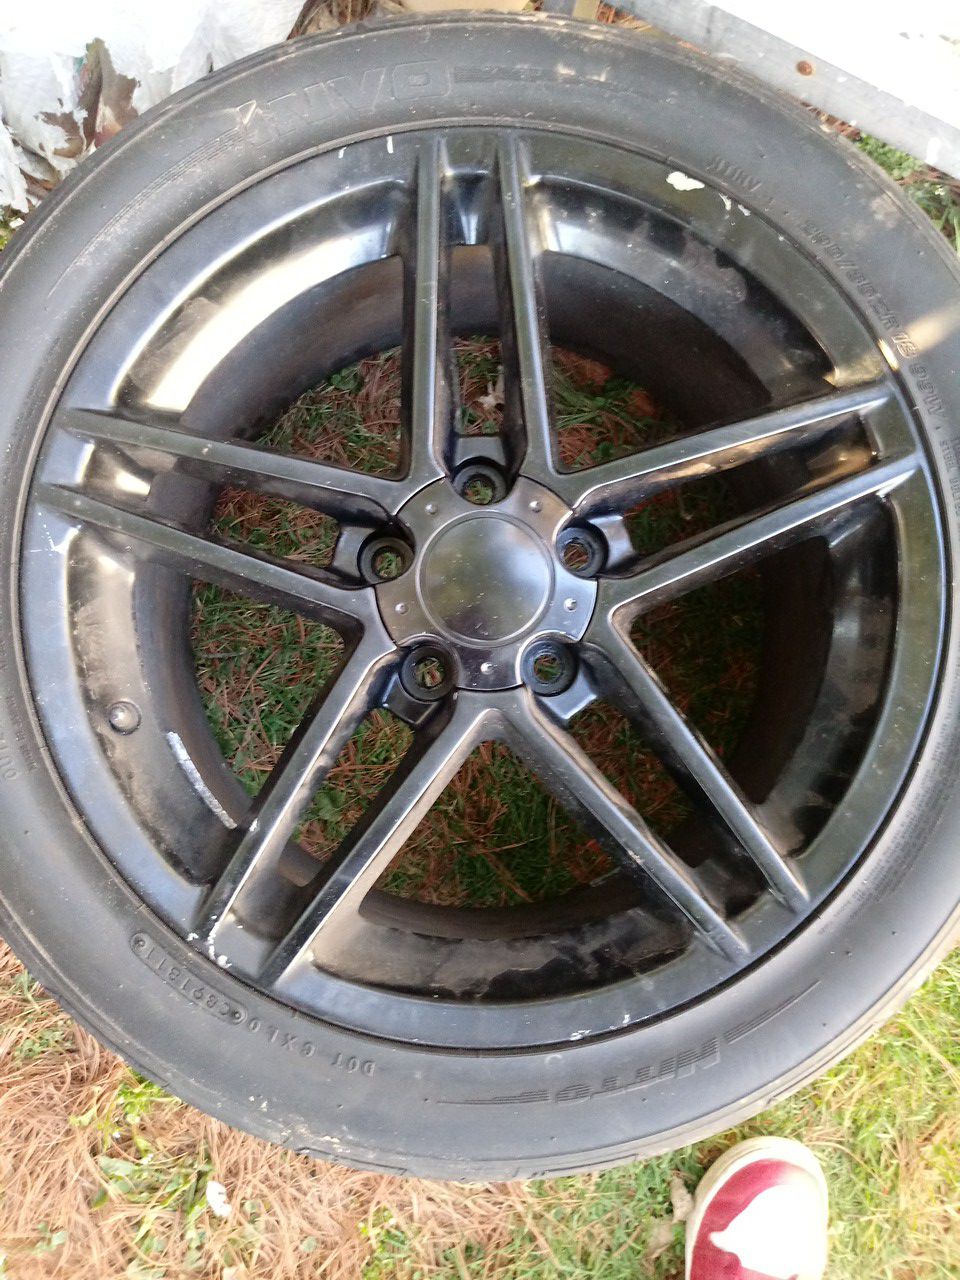 Chevy corvette 18" wheels..